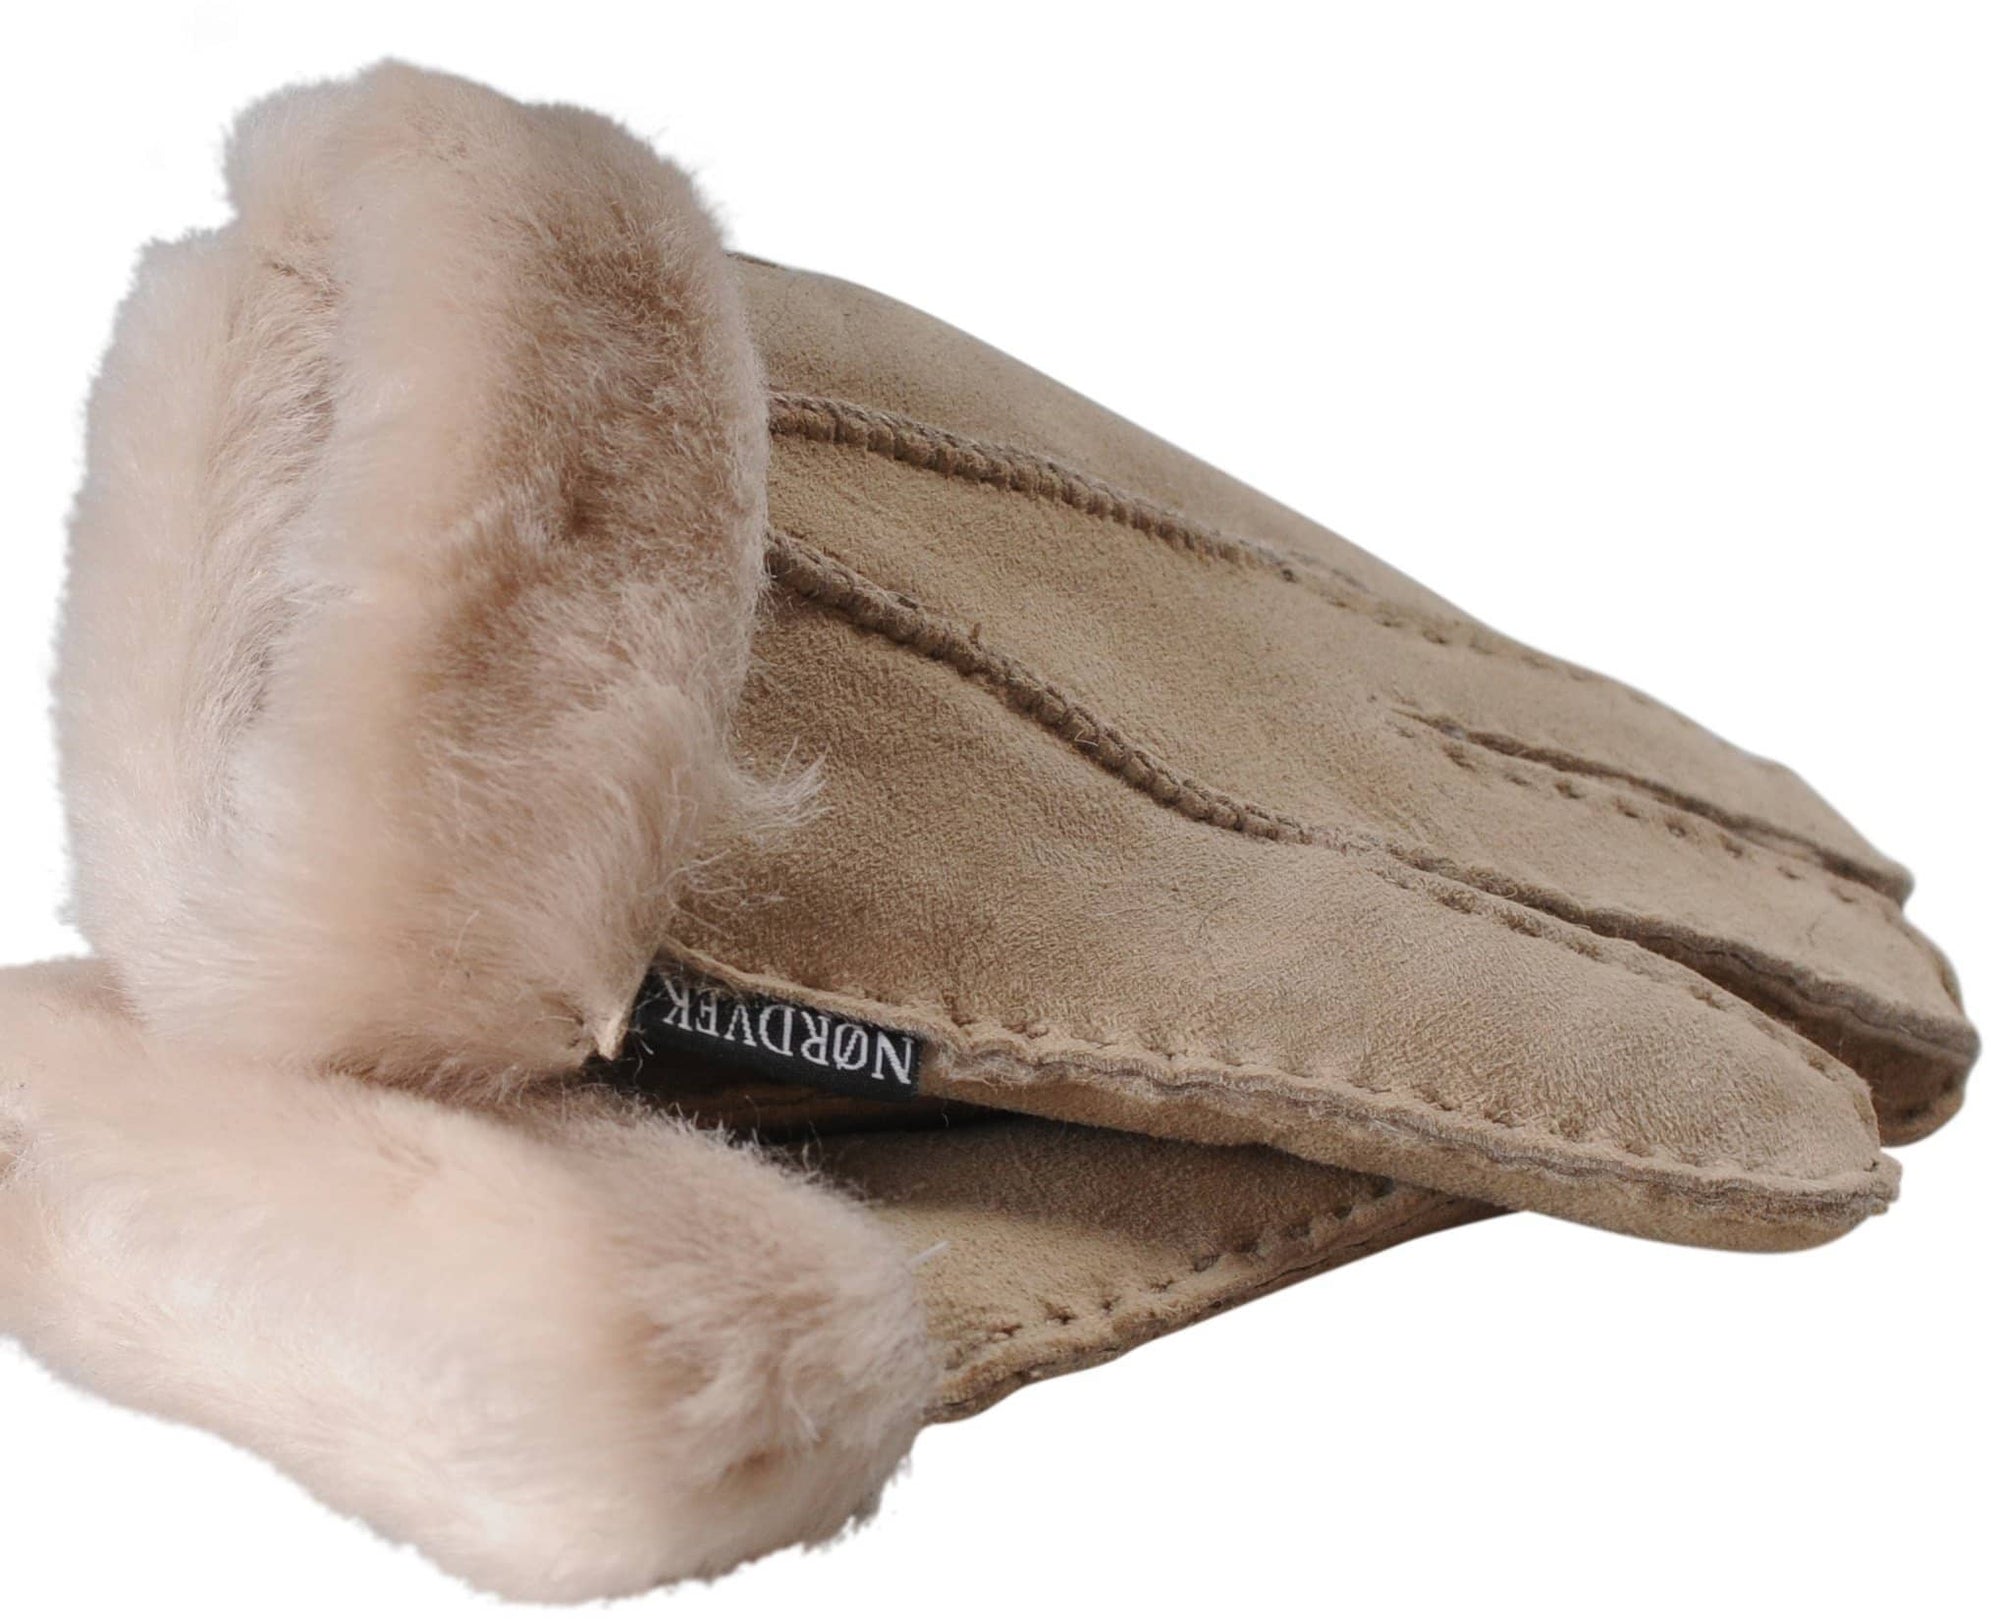 Nordvek childrens sheepskin gloves 313-100 chestnut pair